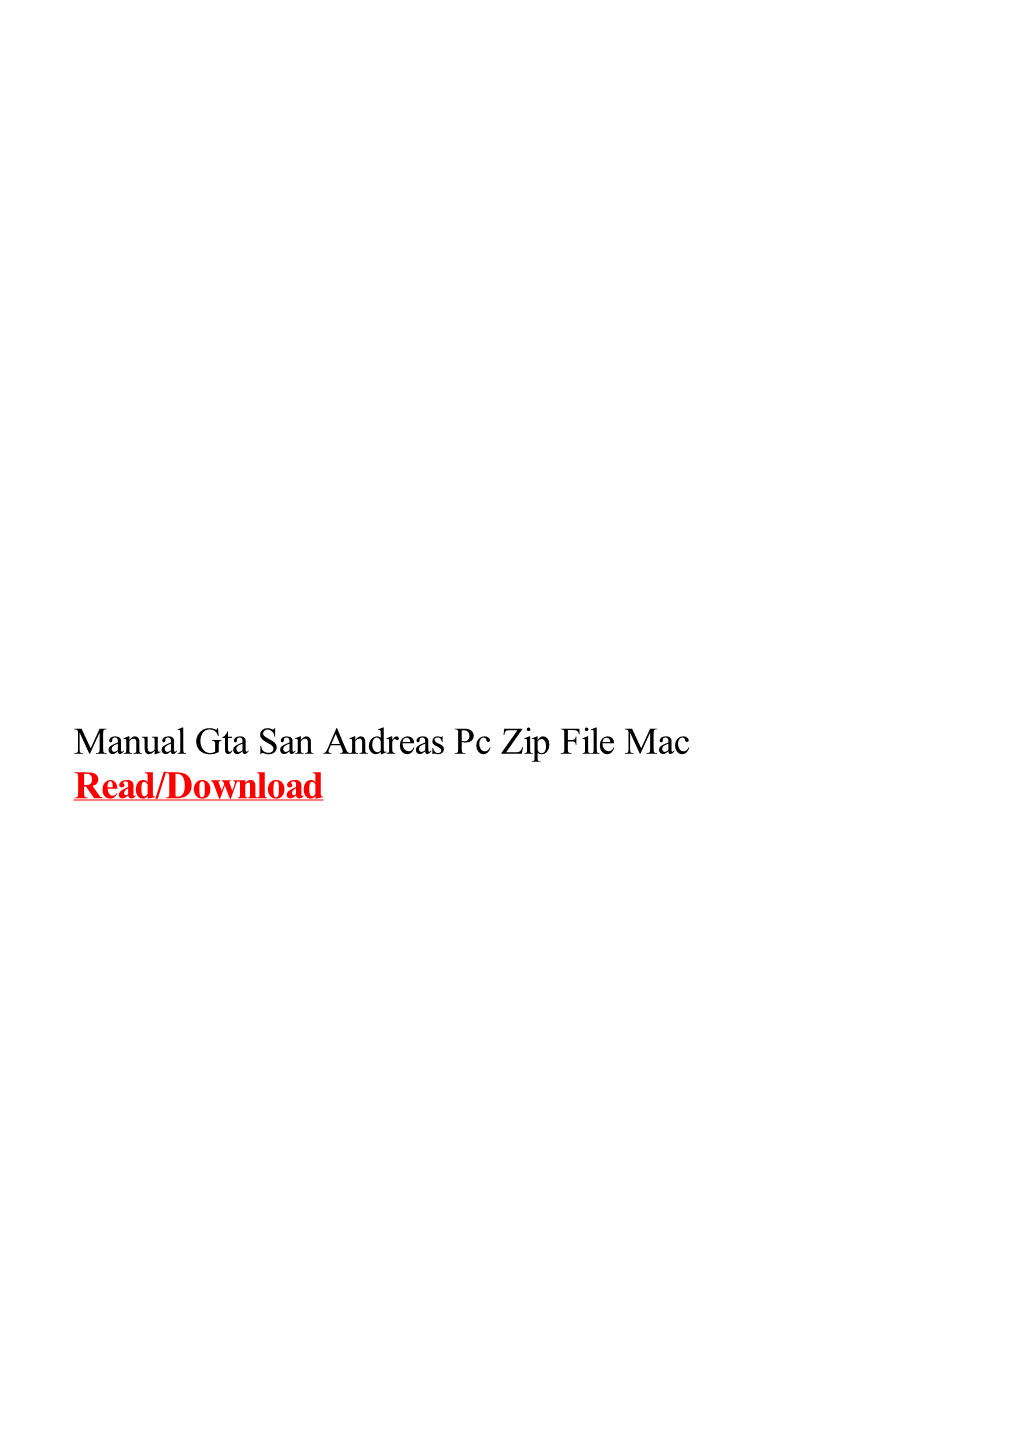 Manual Gta San Andreas Pc Zip File Mac